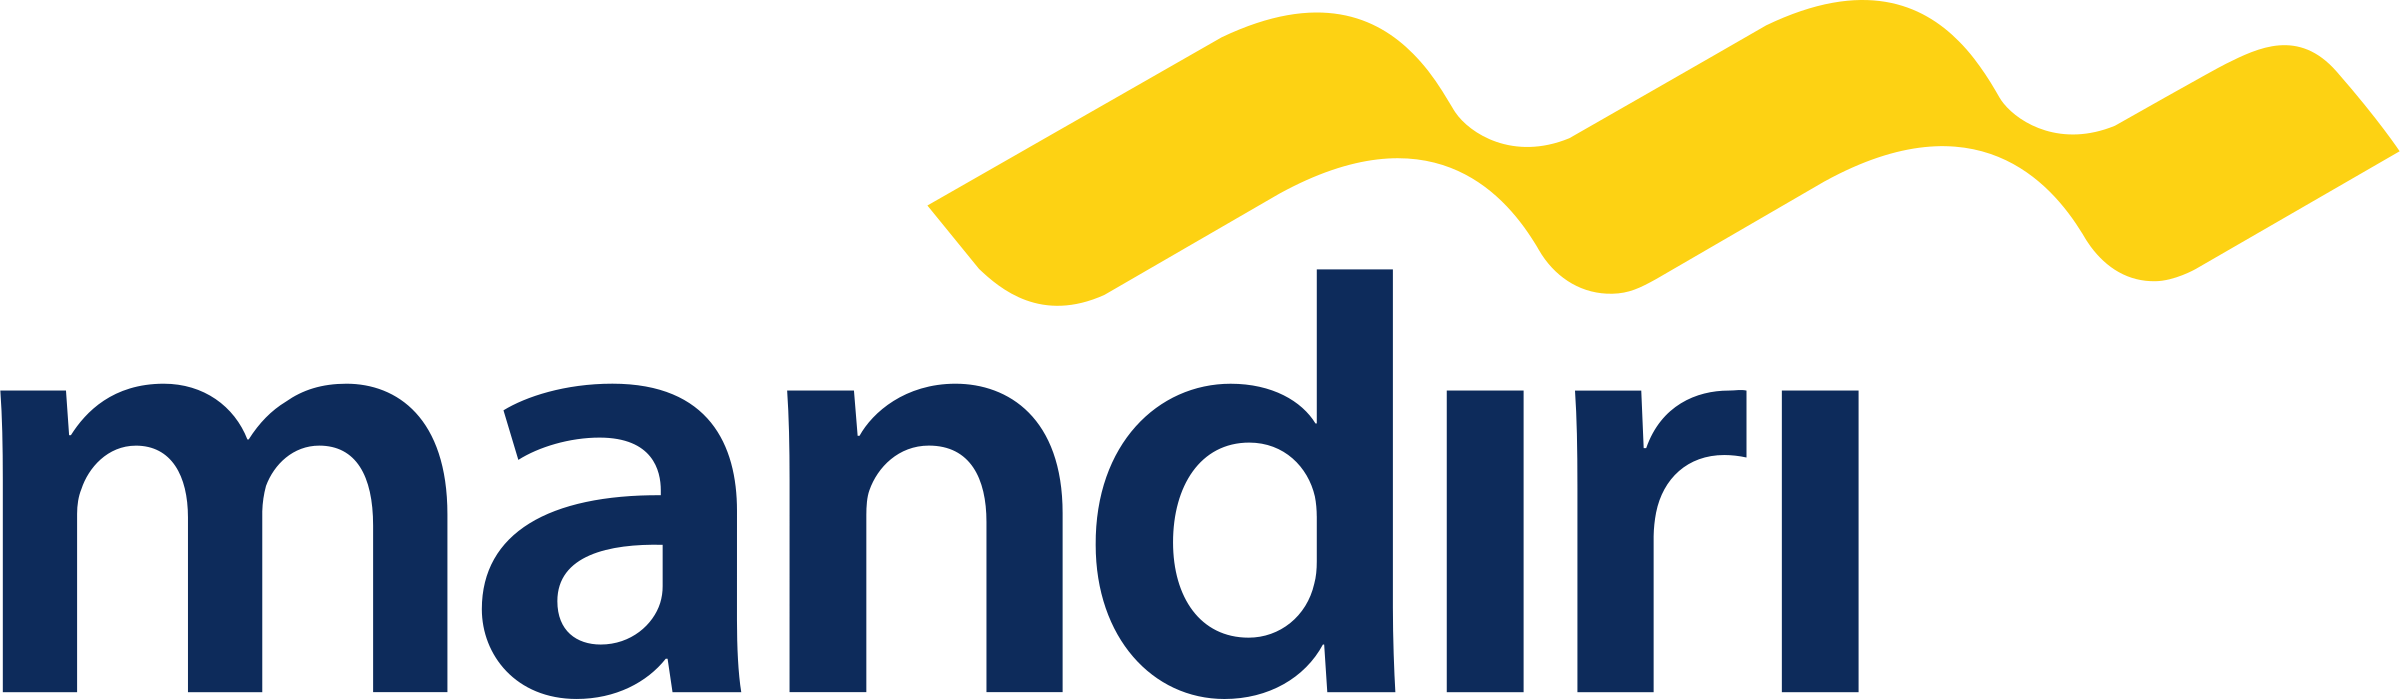 Download Logo Mandiri Png - KibrisPDR